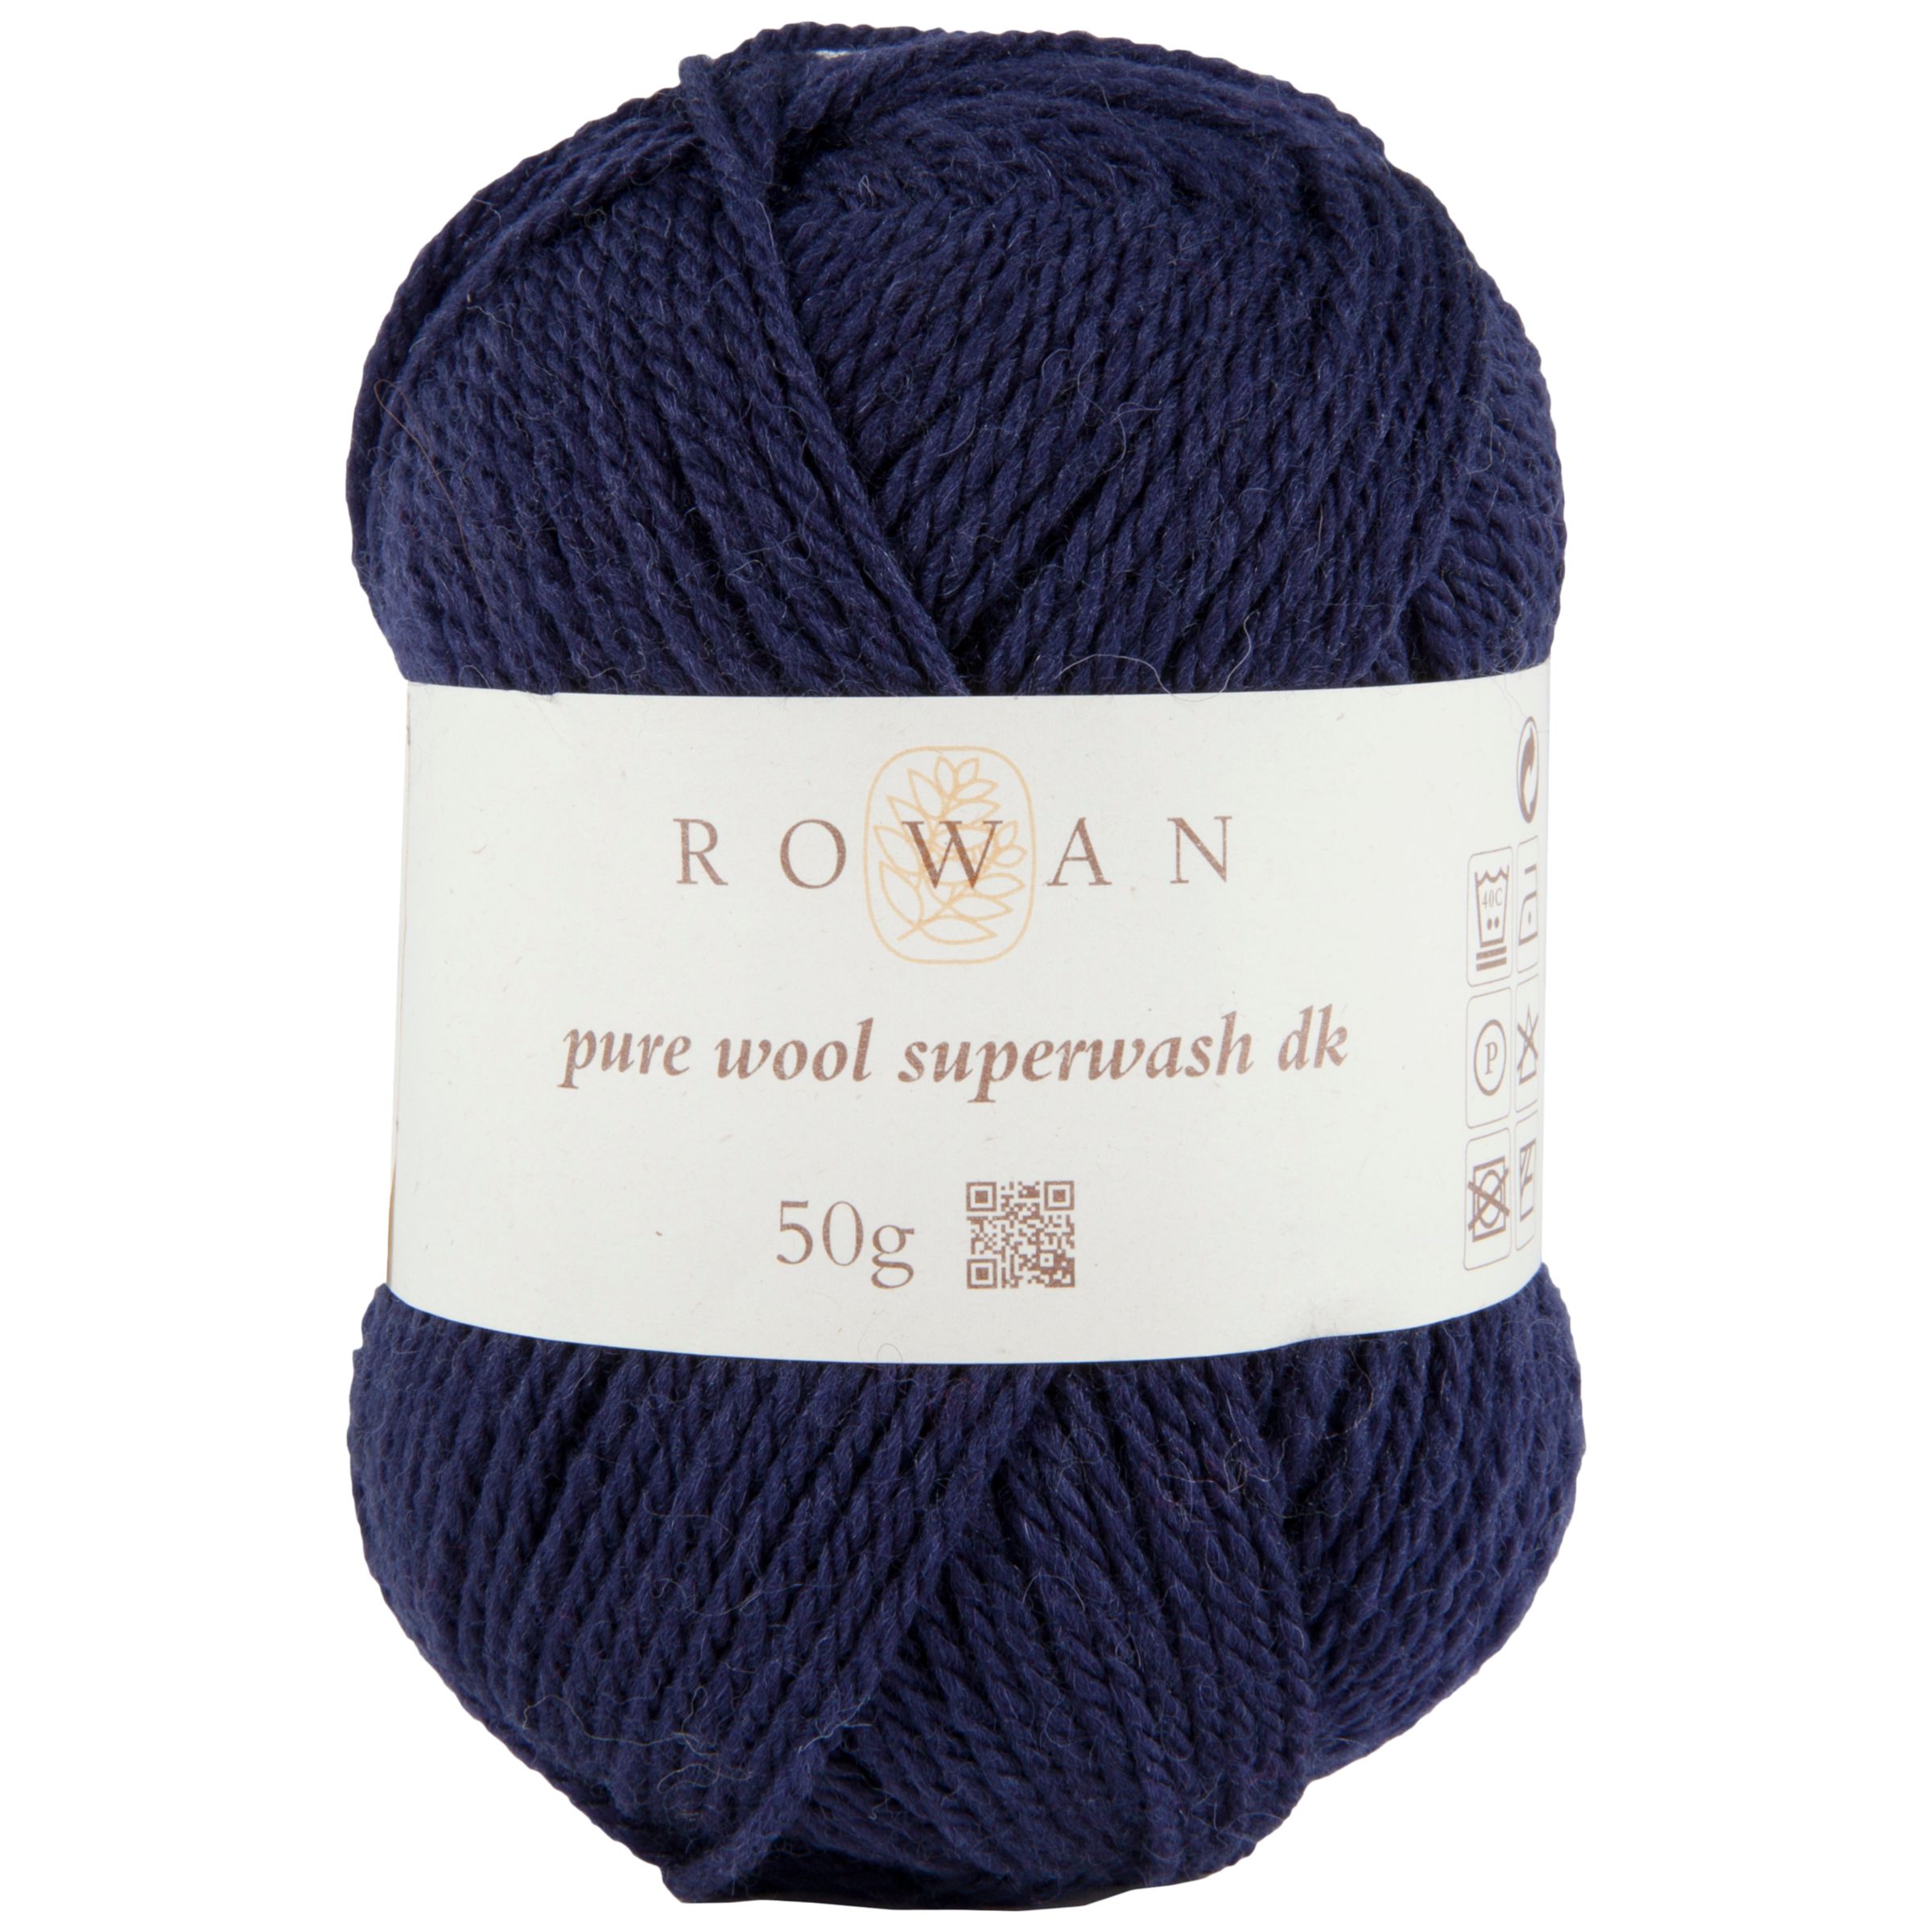 Rowan Pure Wool Super Wash DK Yarn, 50g